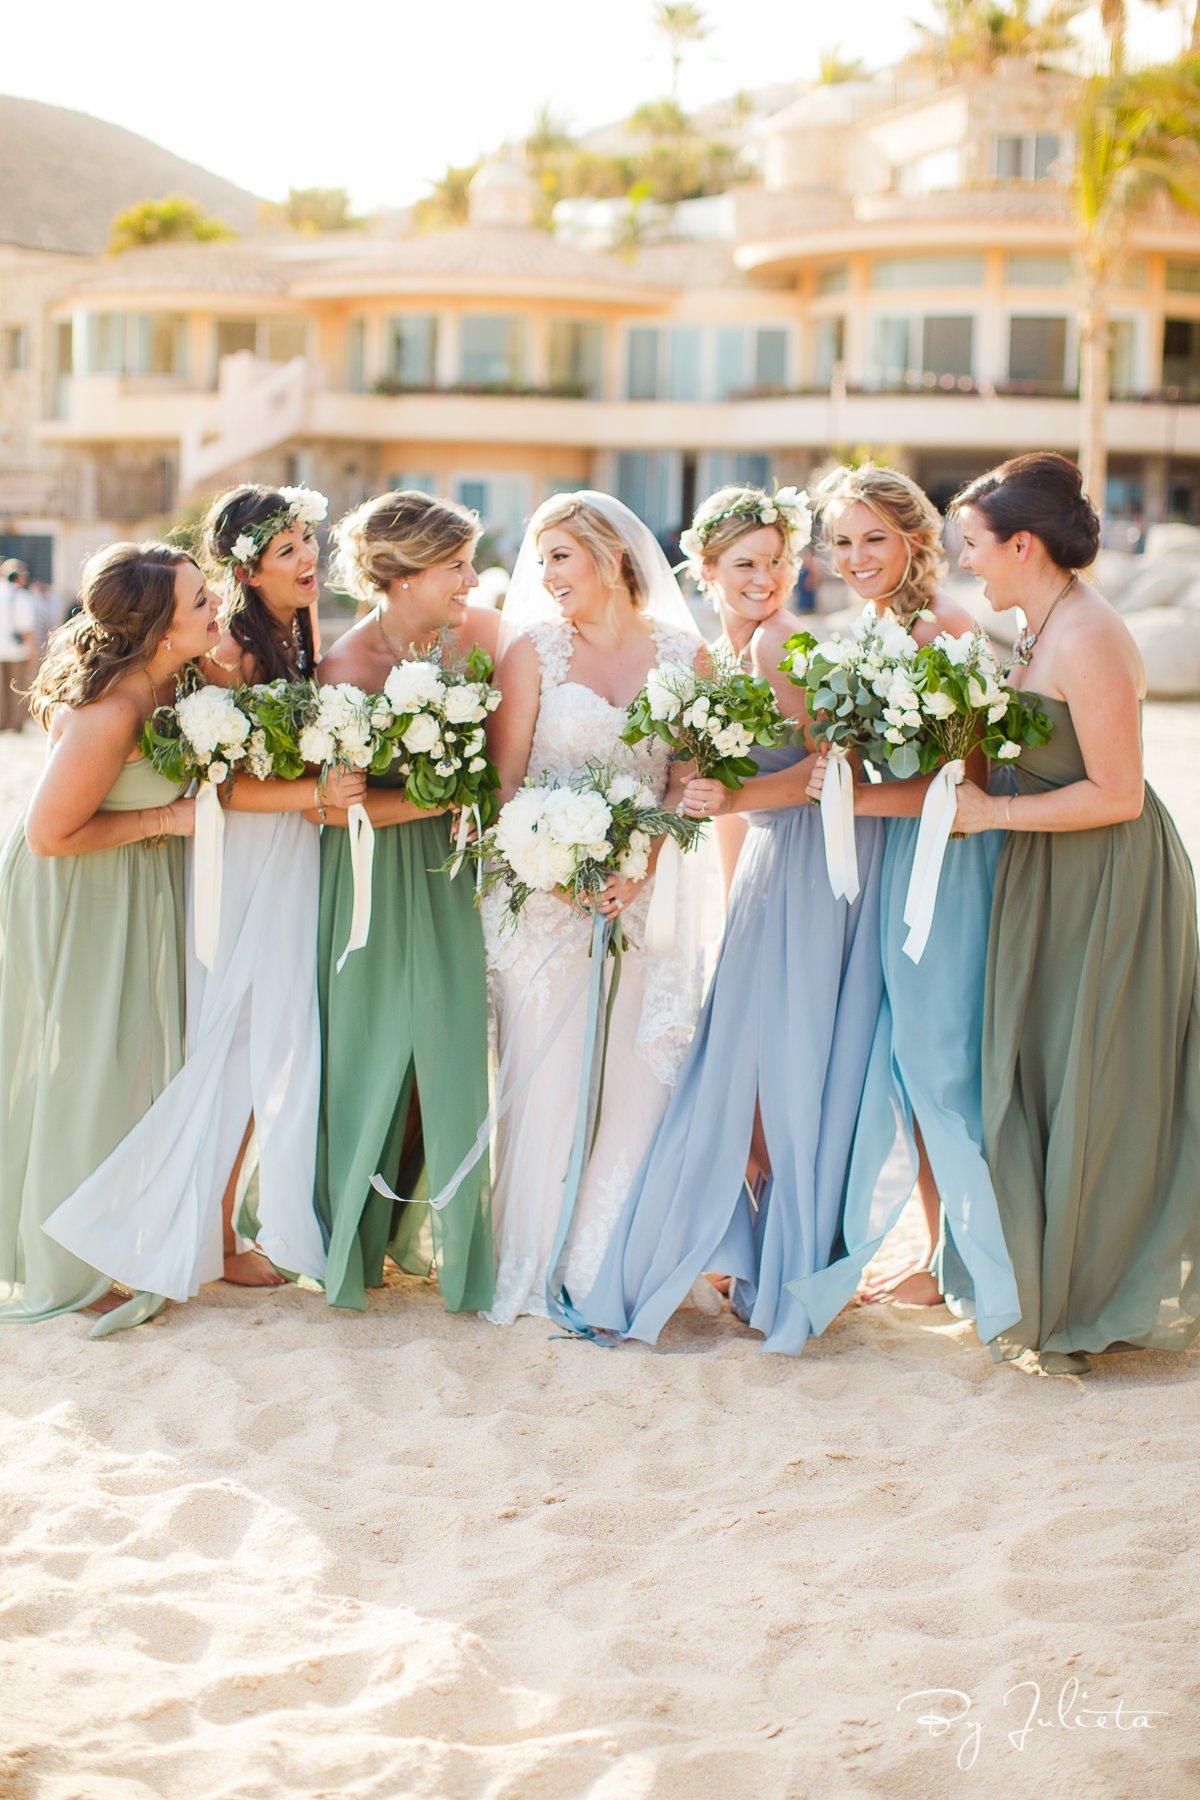 Top 8 Blush Plus Size Bridesmaid Dresses To Please You - ColorsBridesmaid